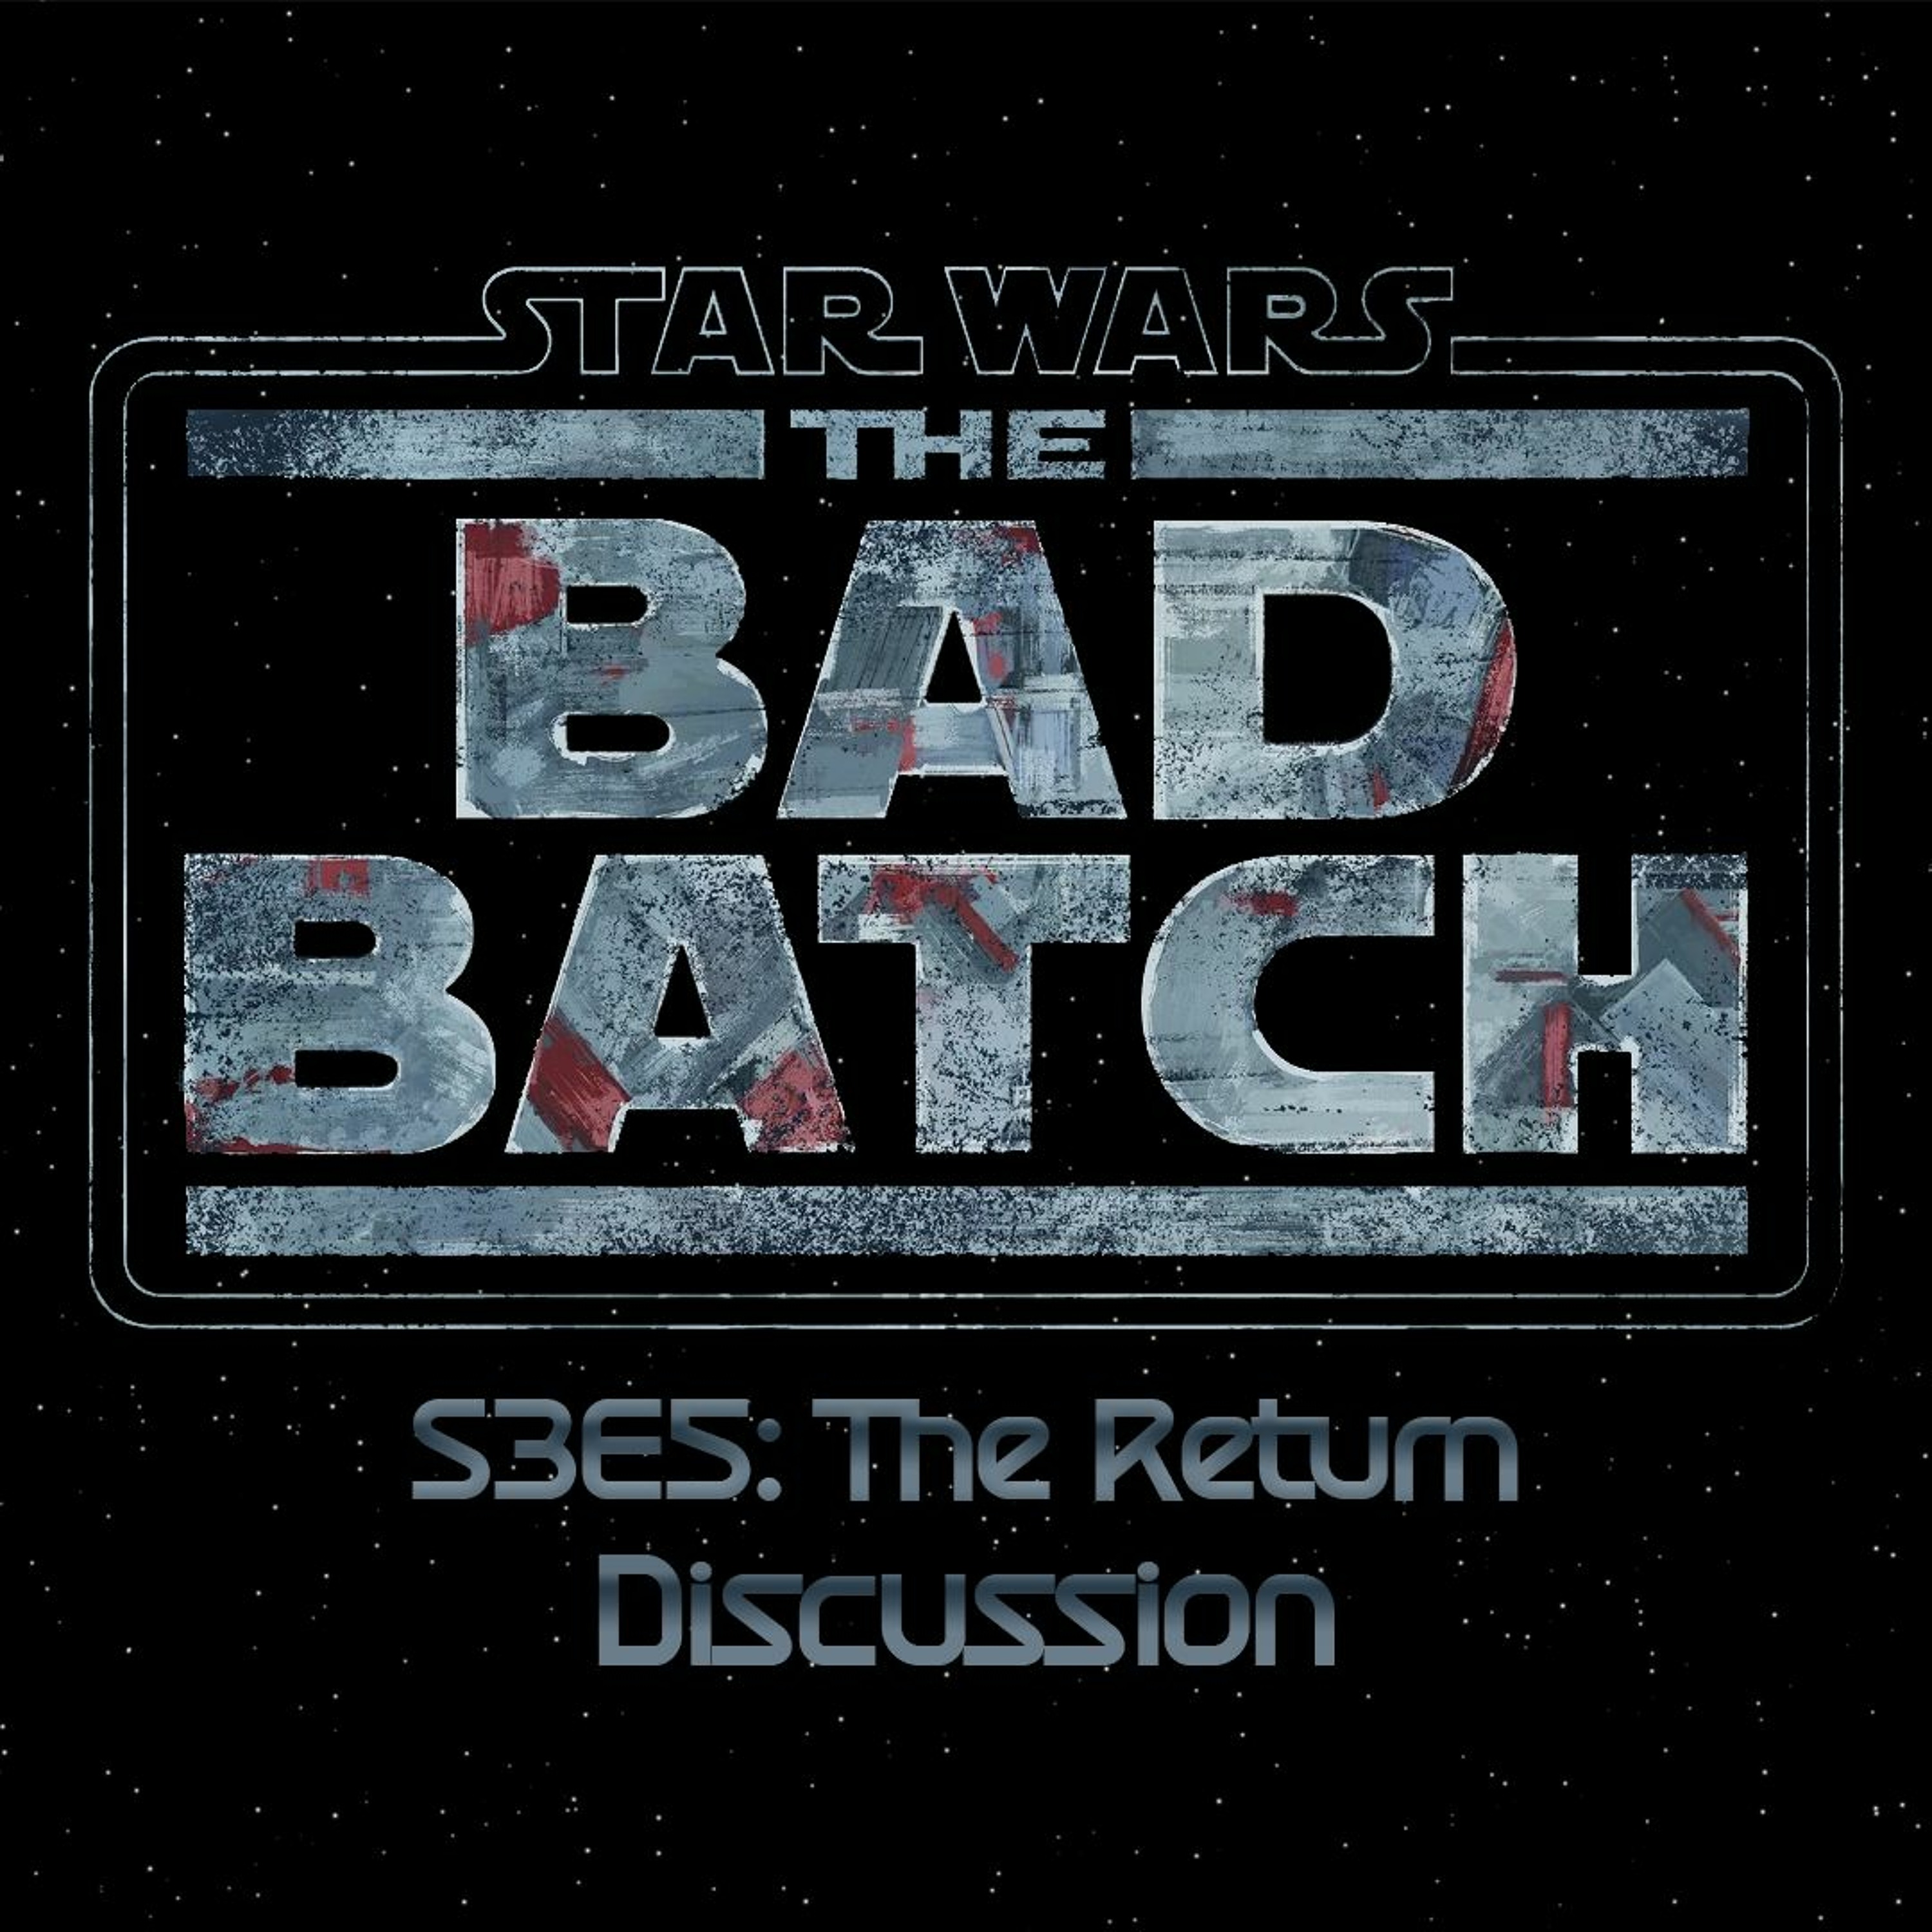 The Bad Batch S3E5: The Return